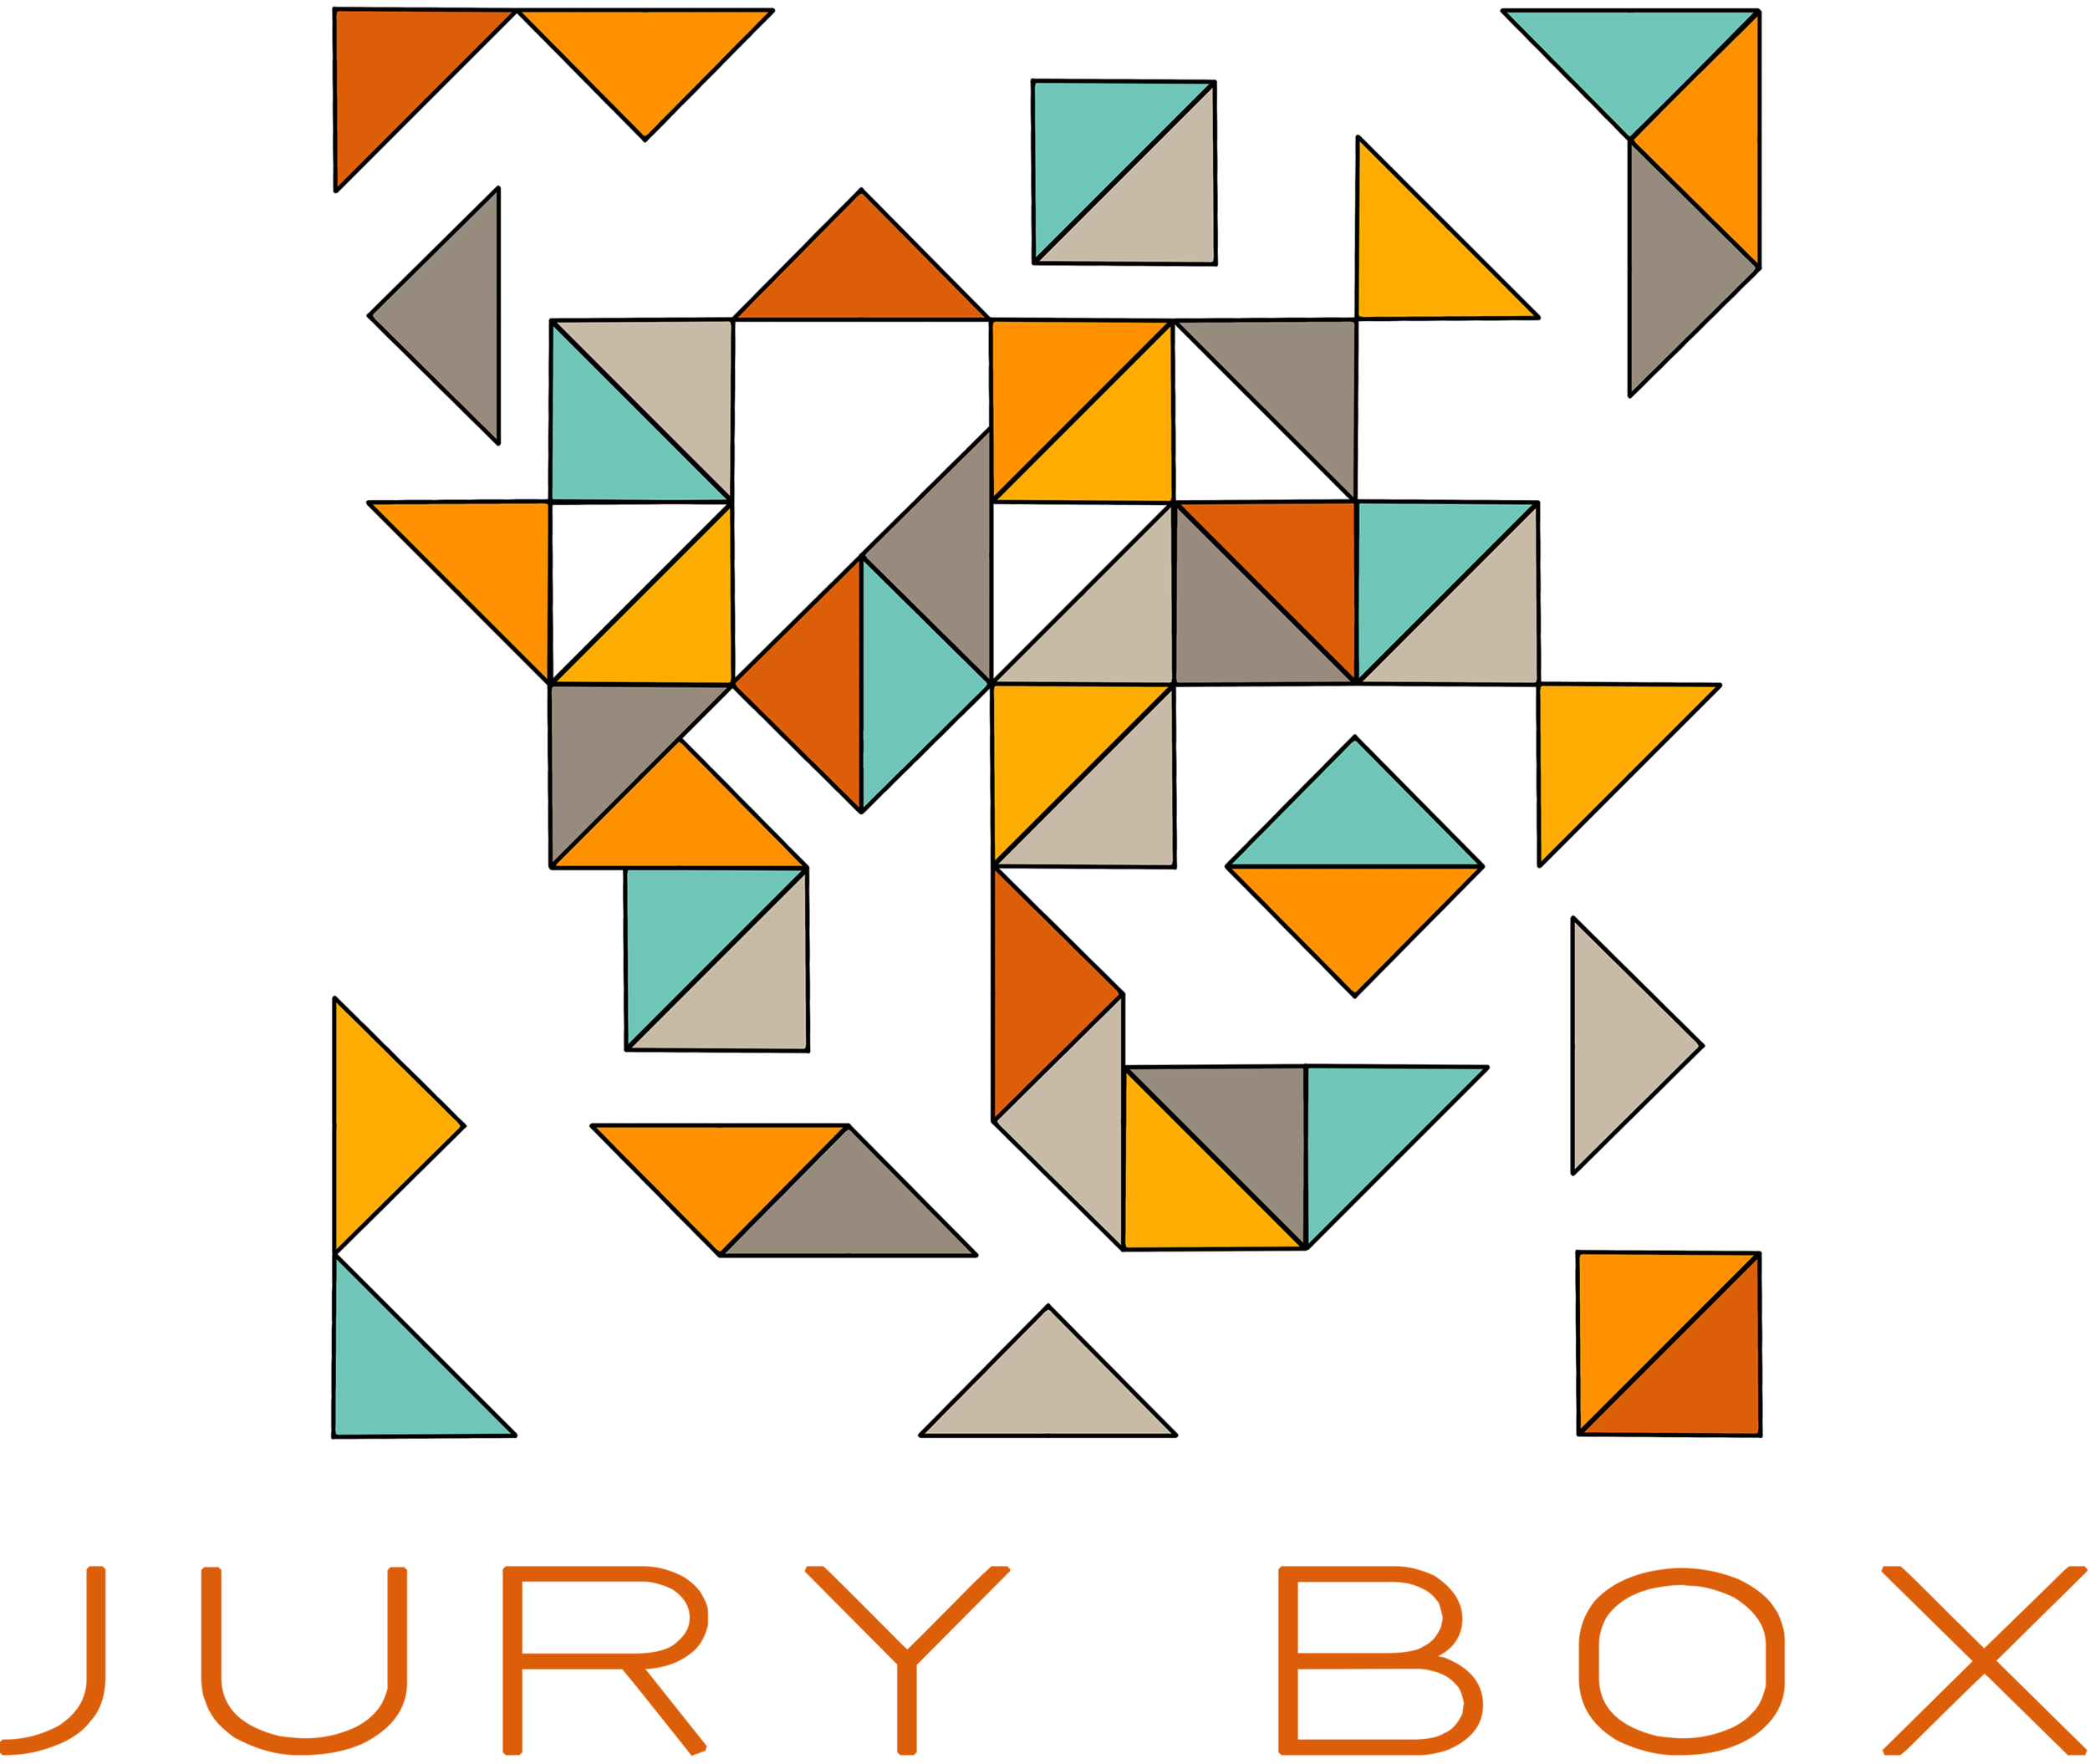 JURY BOX